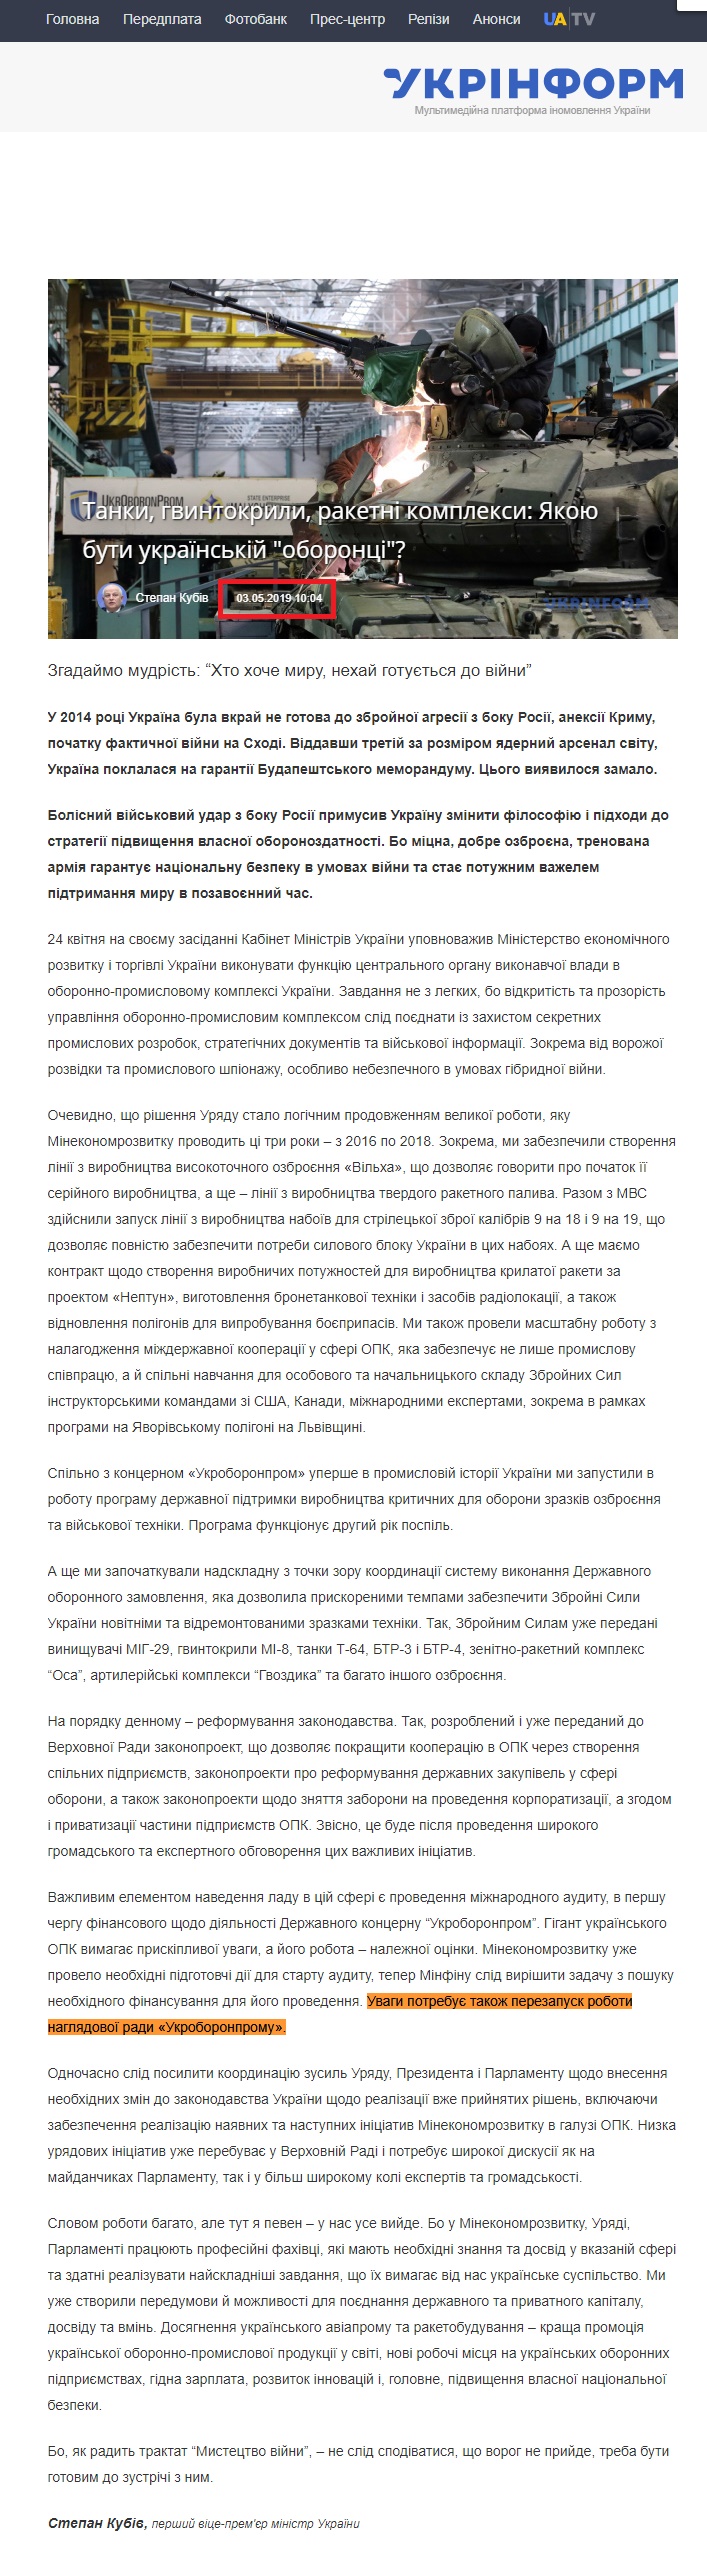 https://www.ukrinform.ua/rubric-polytics/2692836-tanki-gvintokrili-raketni-kompleksi-so-robitsa-v-ukrainskomu-oboronnopromislovomu-kompleksi.html